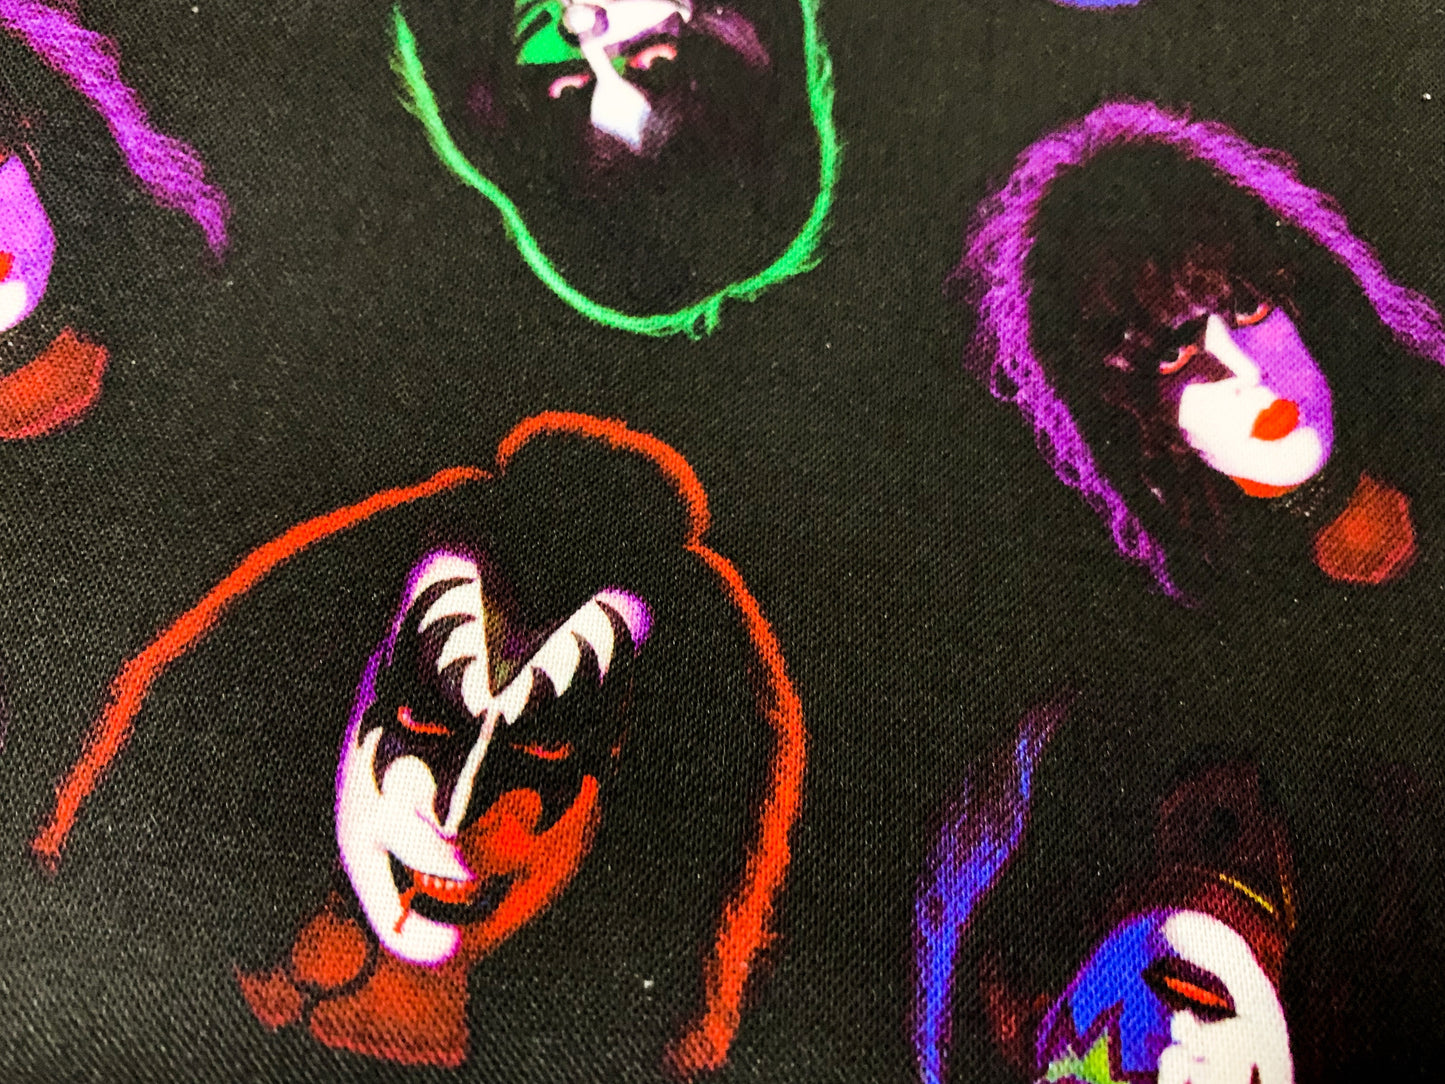 Black Kiss band fabric 71068 Rock band Kissed